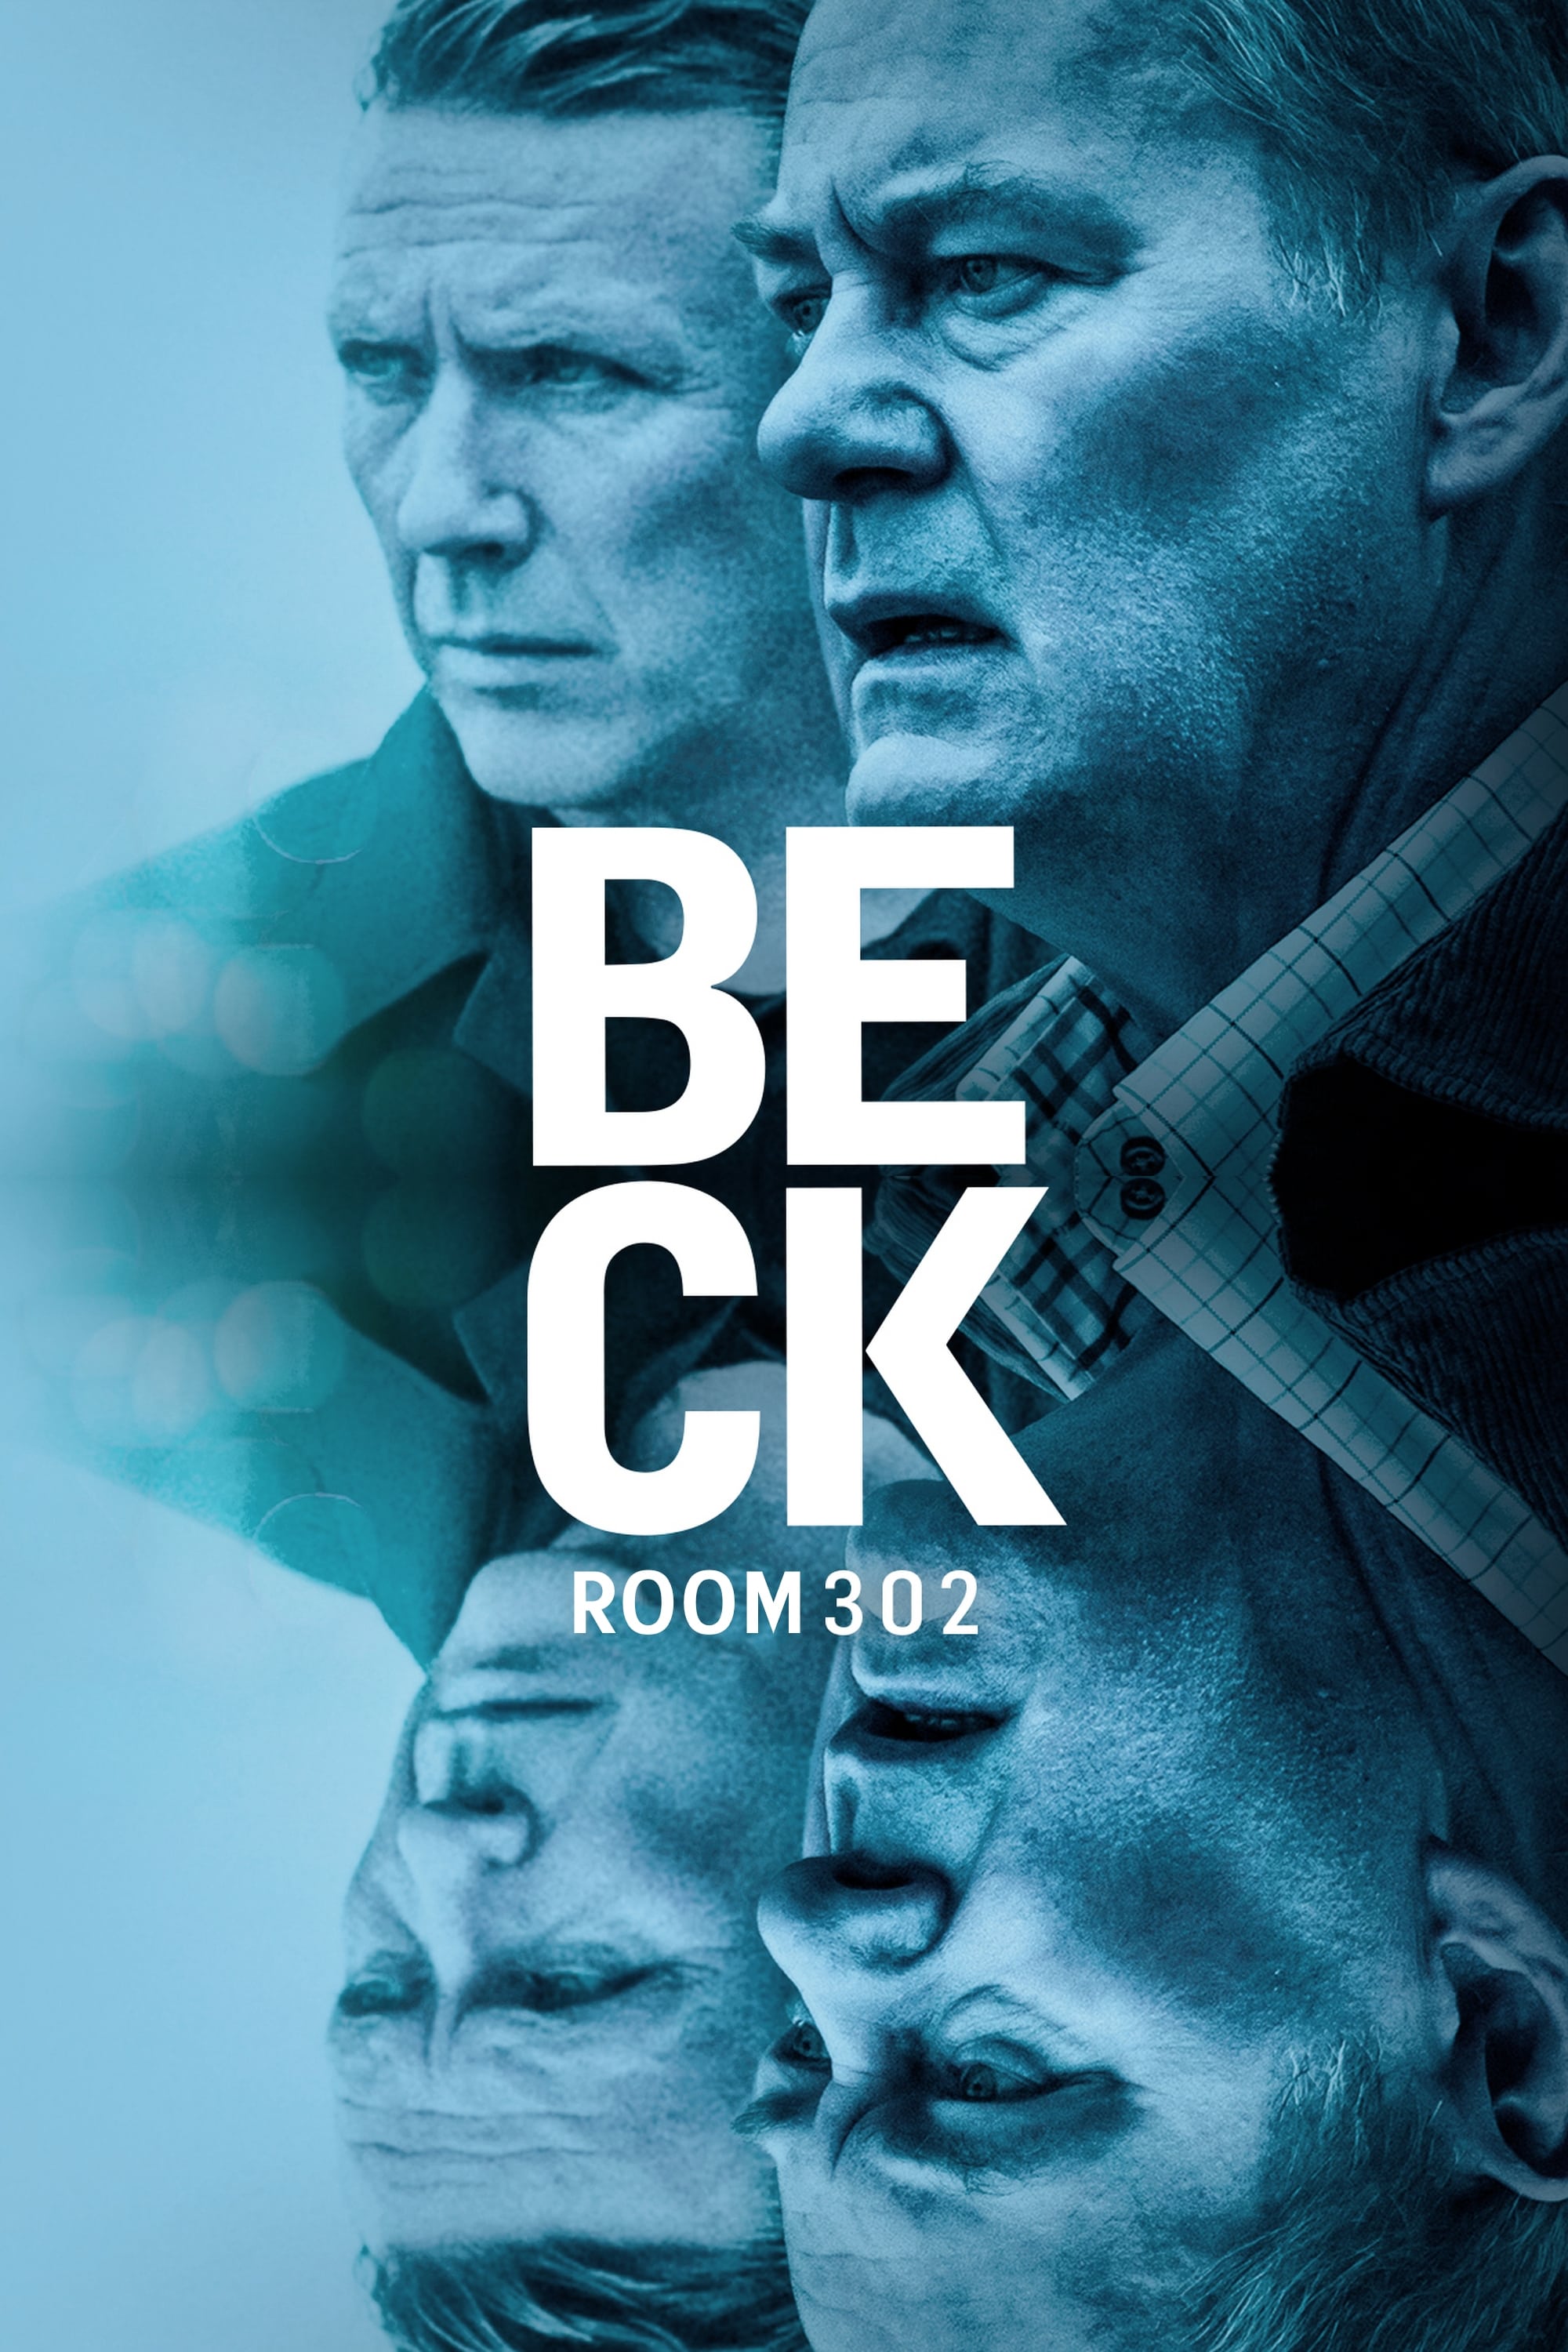 Beck 27 - Room 302